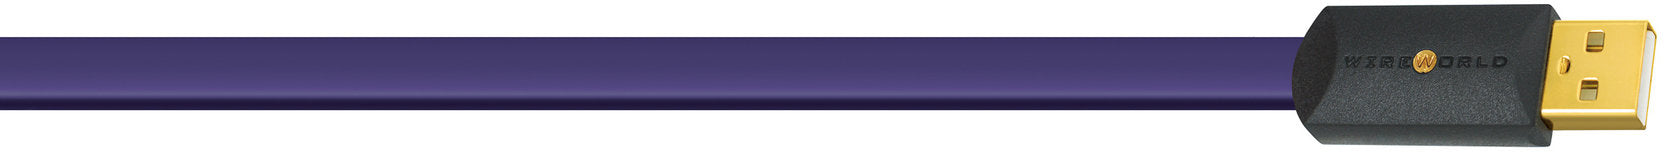 WireWorld Ultraviolet 8 USB 2.0 A -&gt; B, 1 m